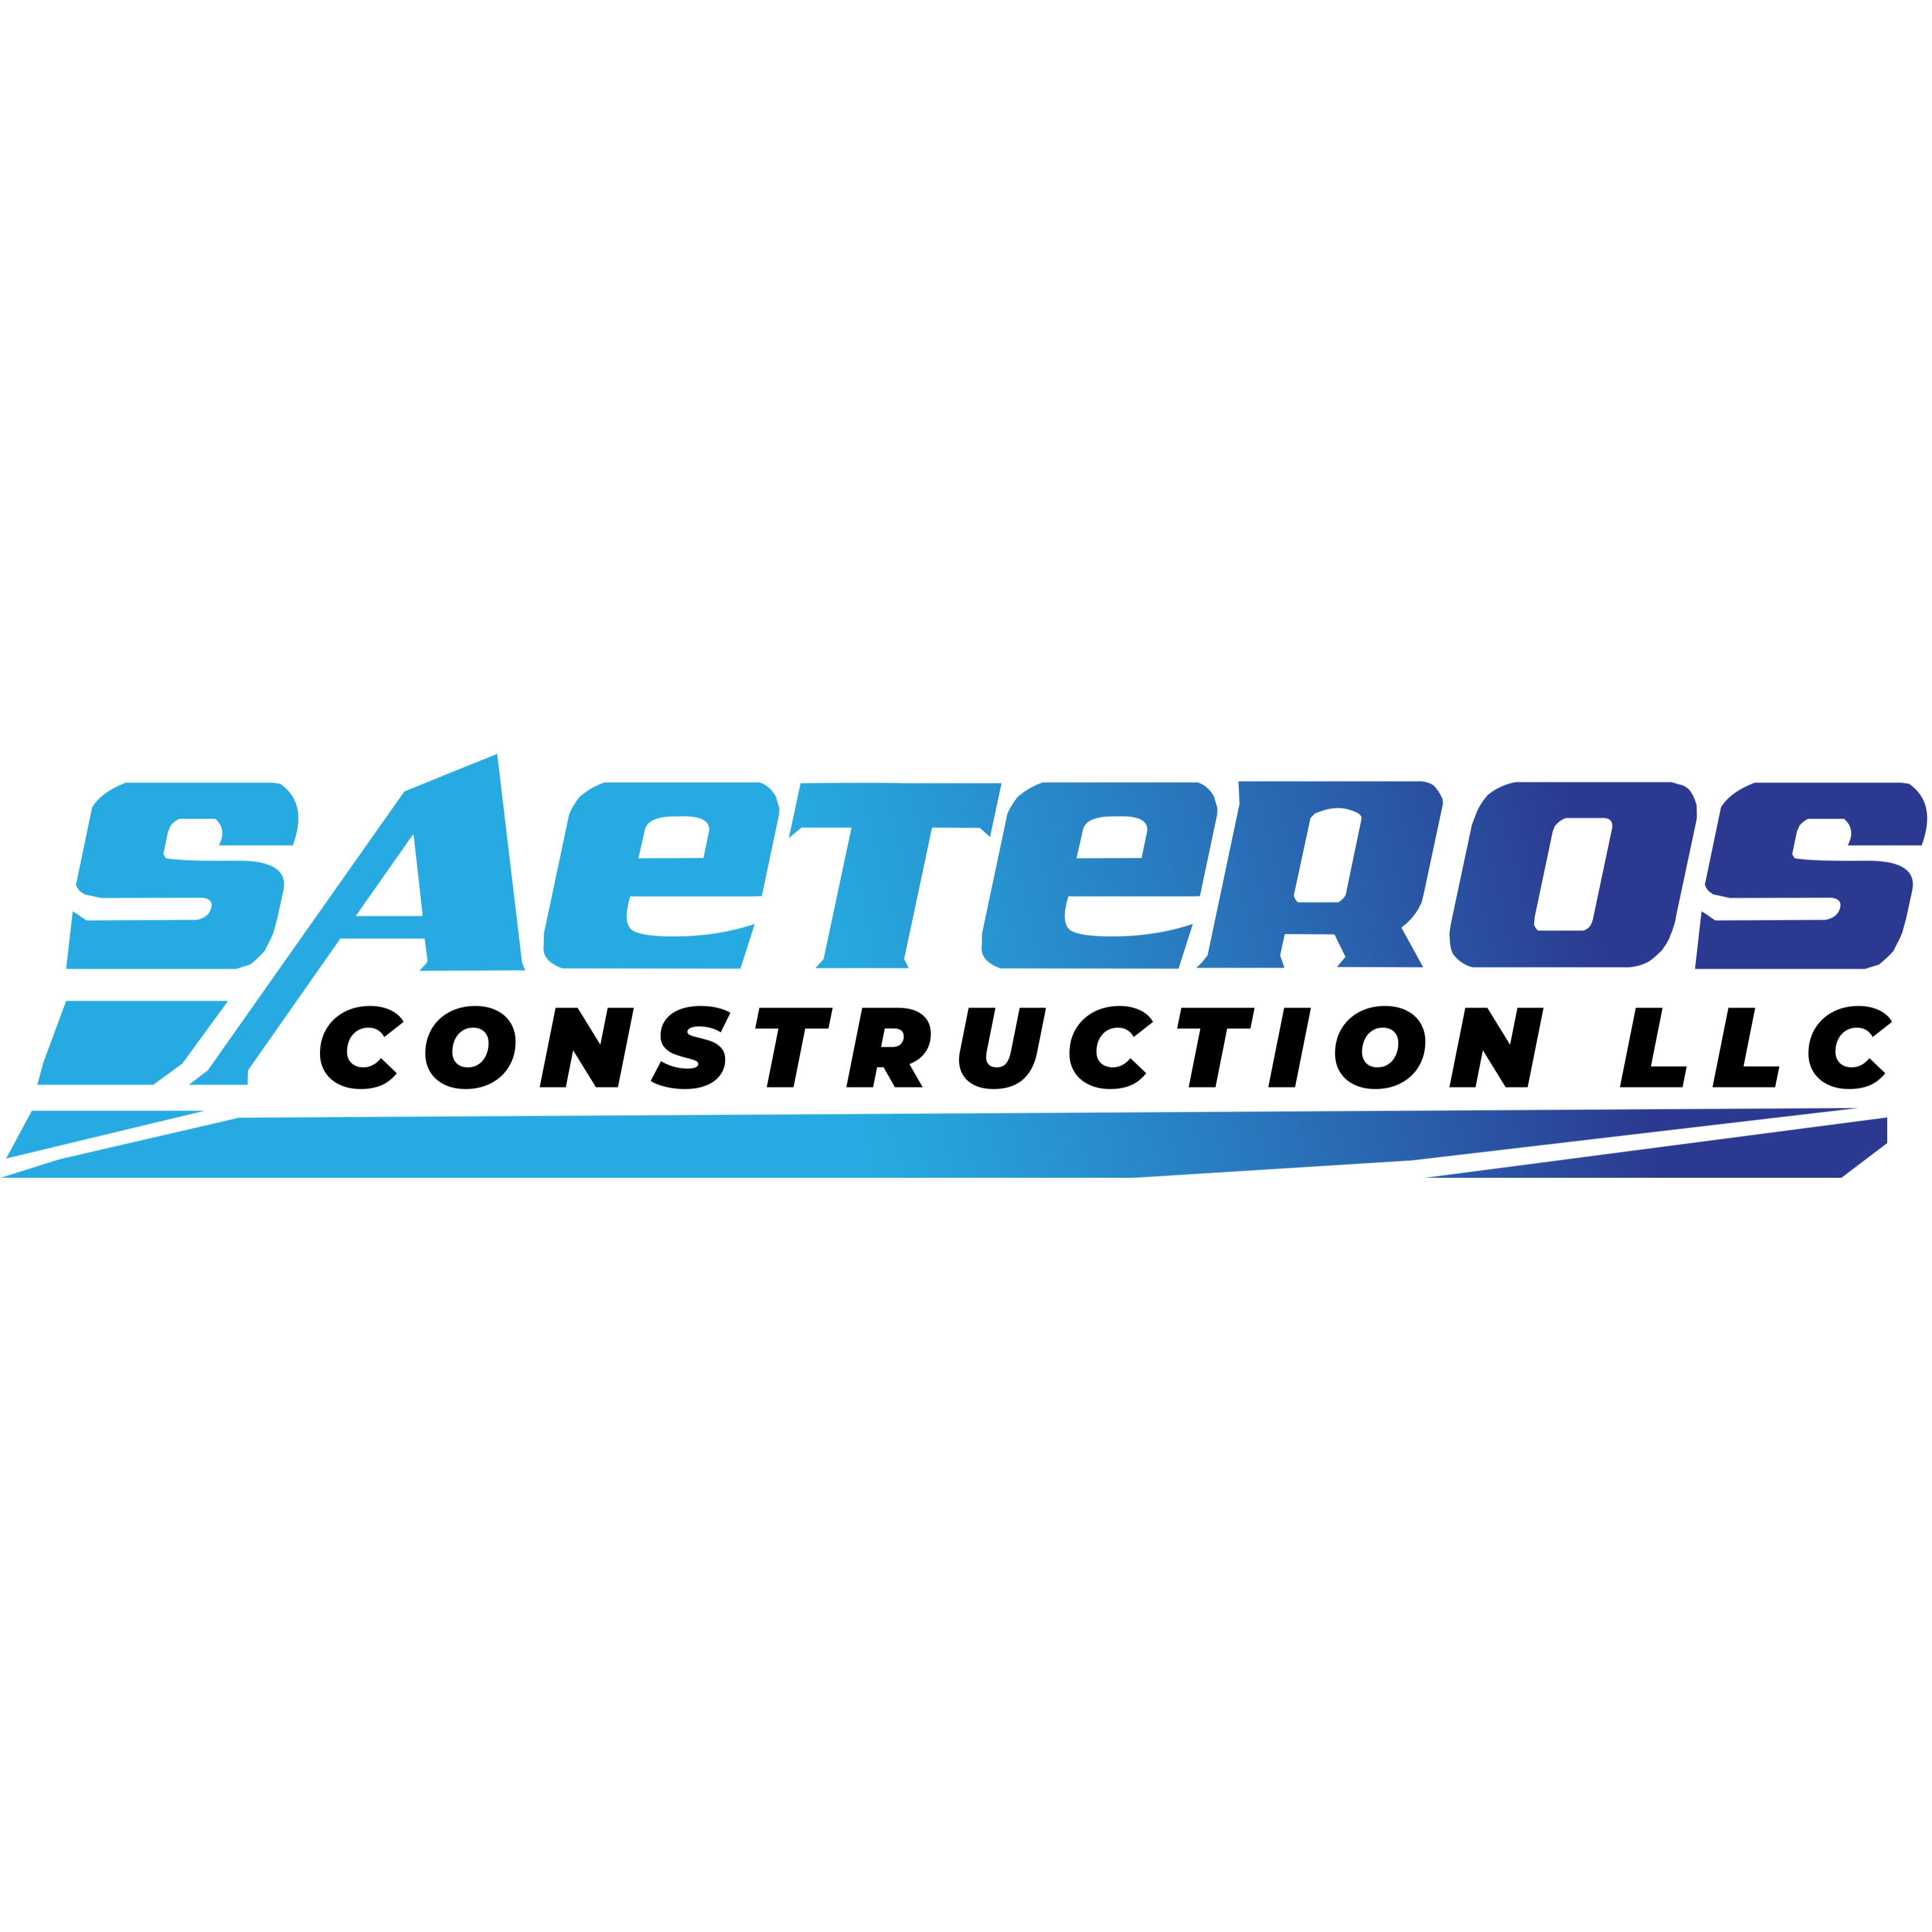 Saeteros Construction LLC - Newark, NJ - (973)282-6464 | ShowMeLocal.com